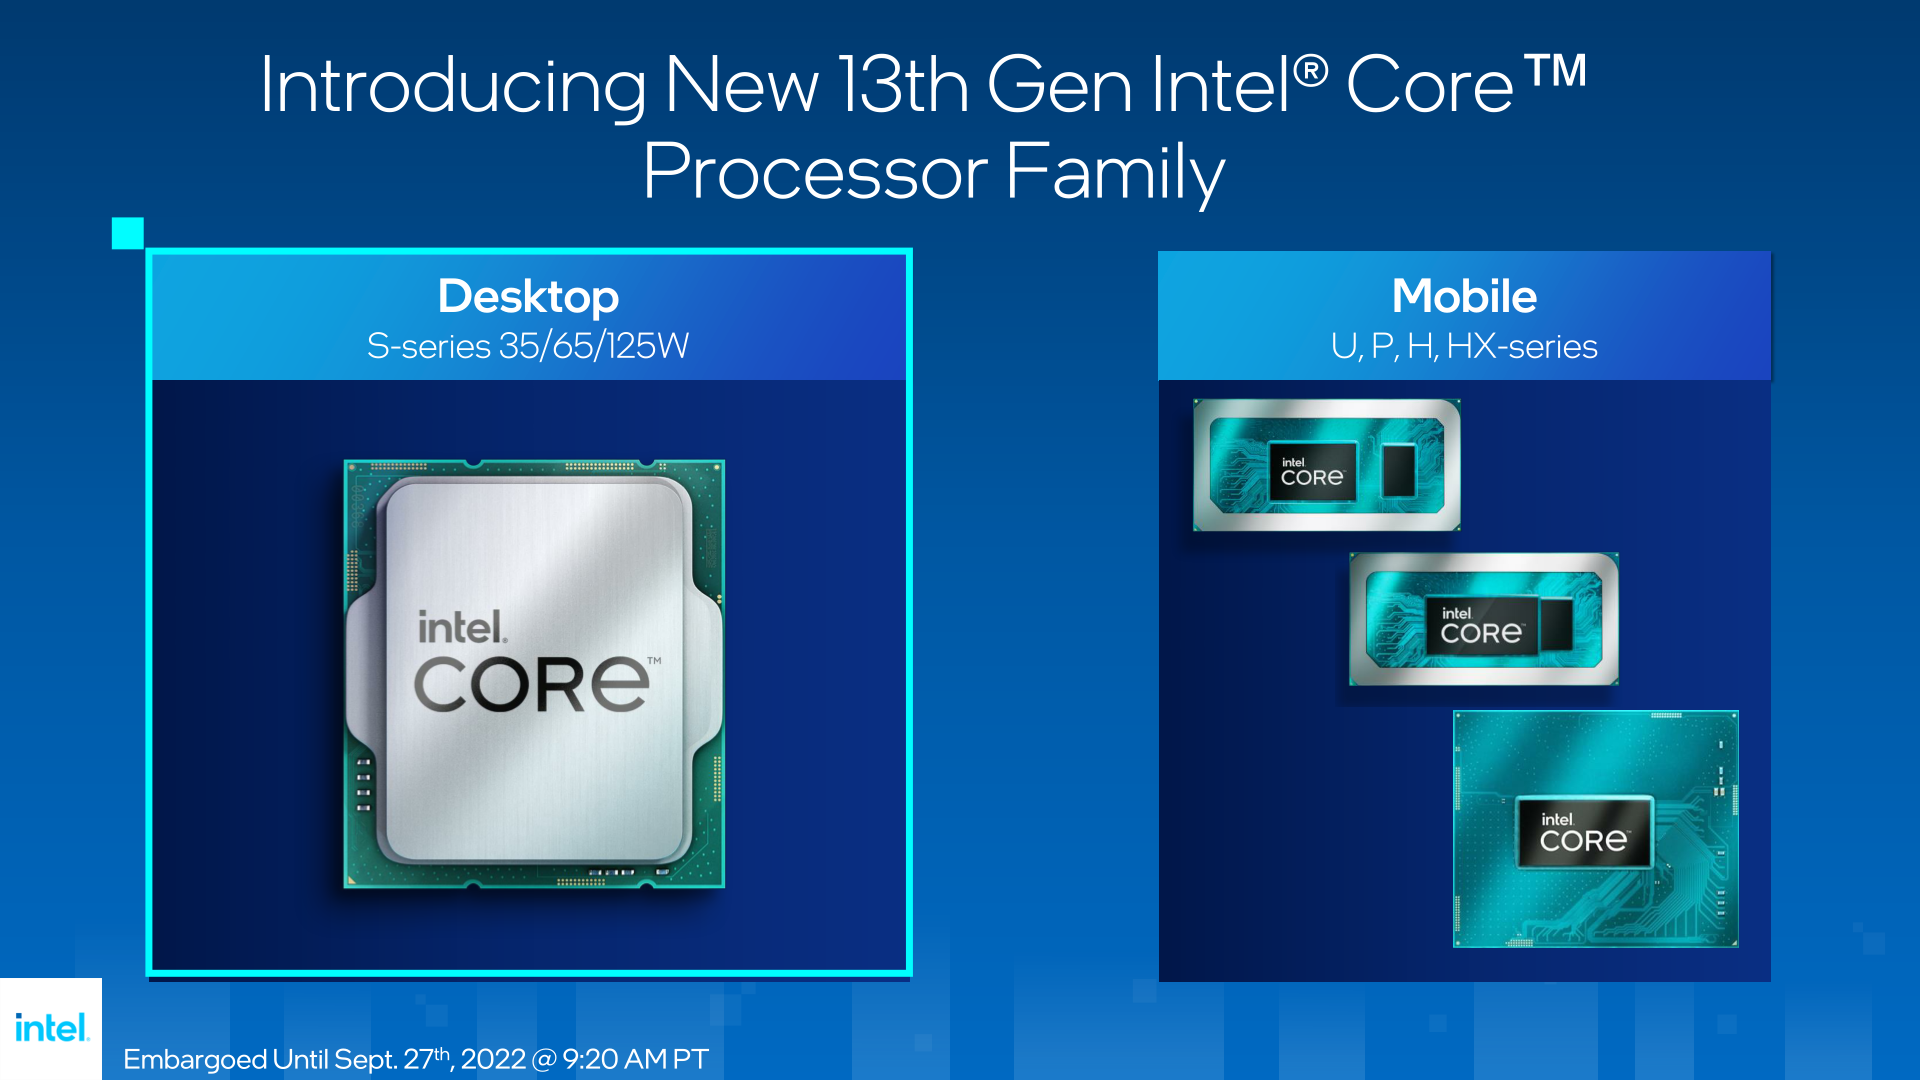 Intel Core i5-13400 (Raptor Lake) Socket LGA1700 Processor - Retail